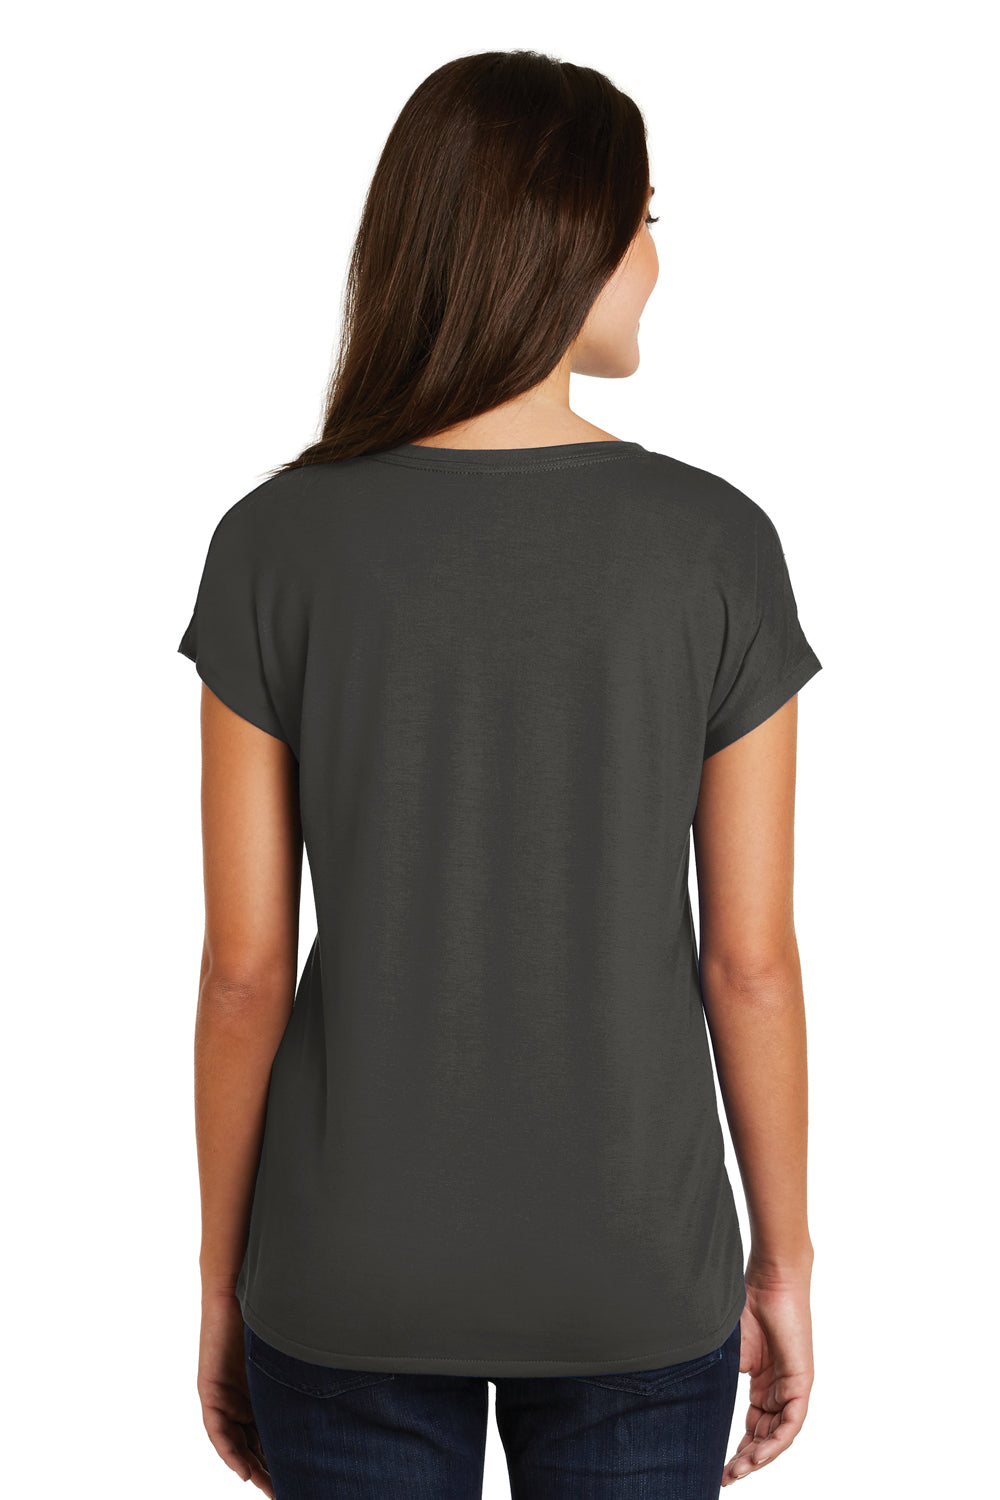 District DM412 Womens Drapey Dolman Short Sleeve Scoop Neck T-Shirt Charcoal Grey Back